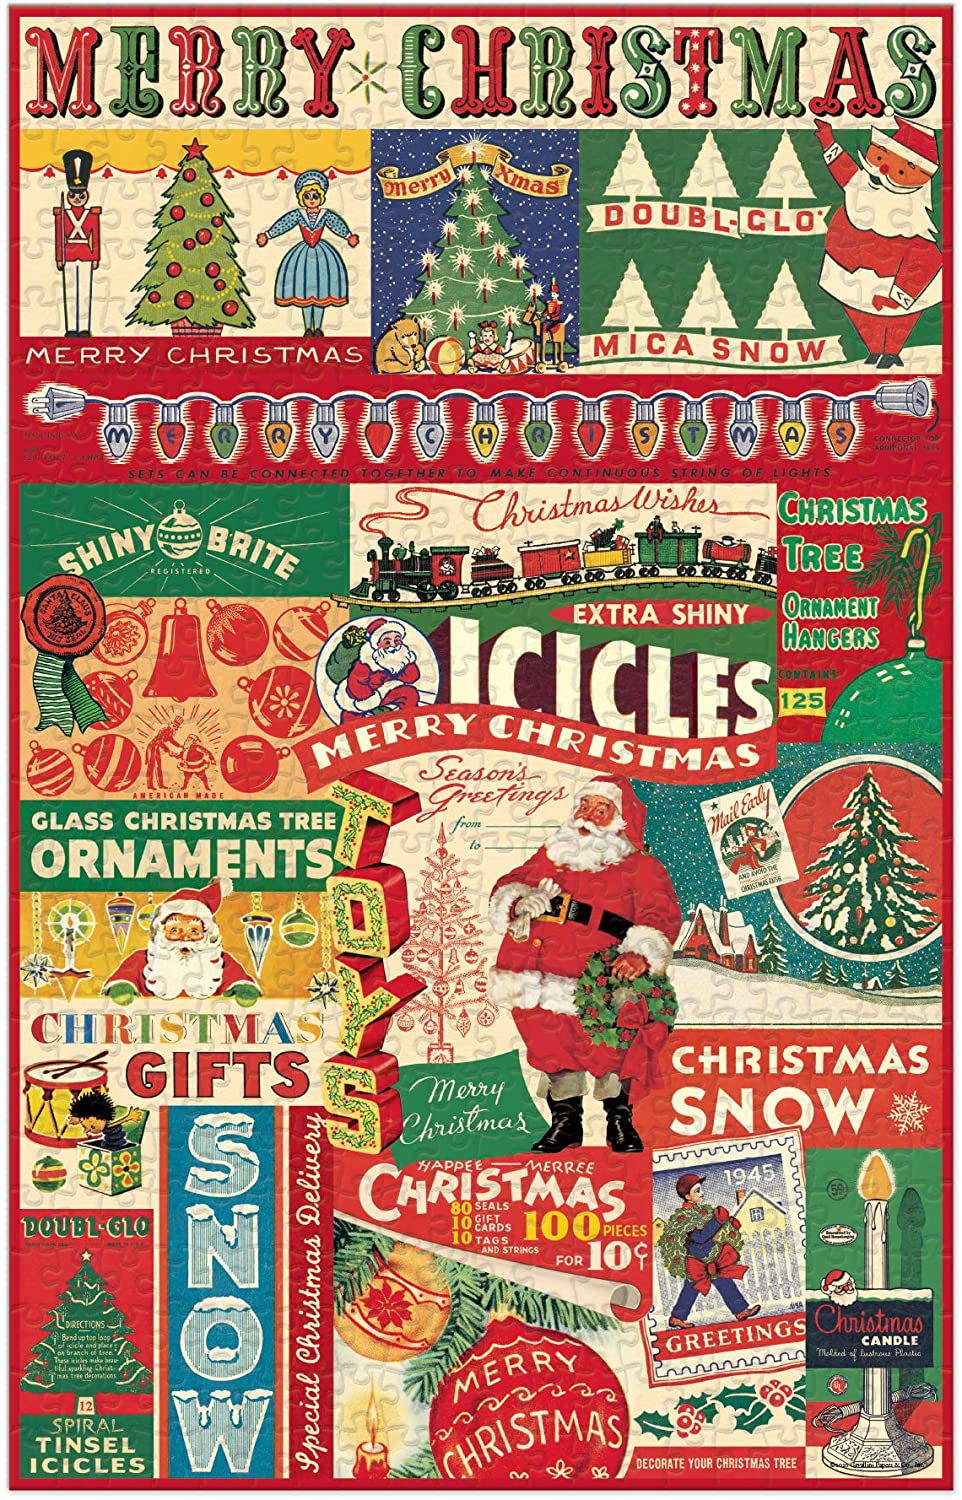 Vintage Christmas 500 Piece Puzzle, Multi